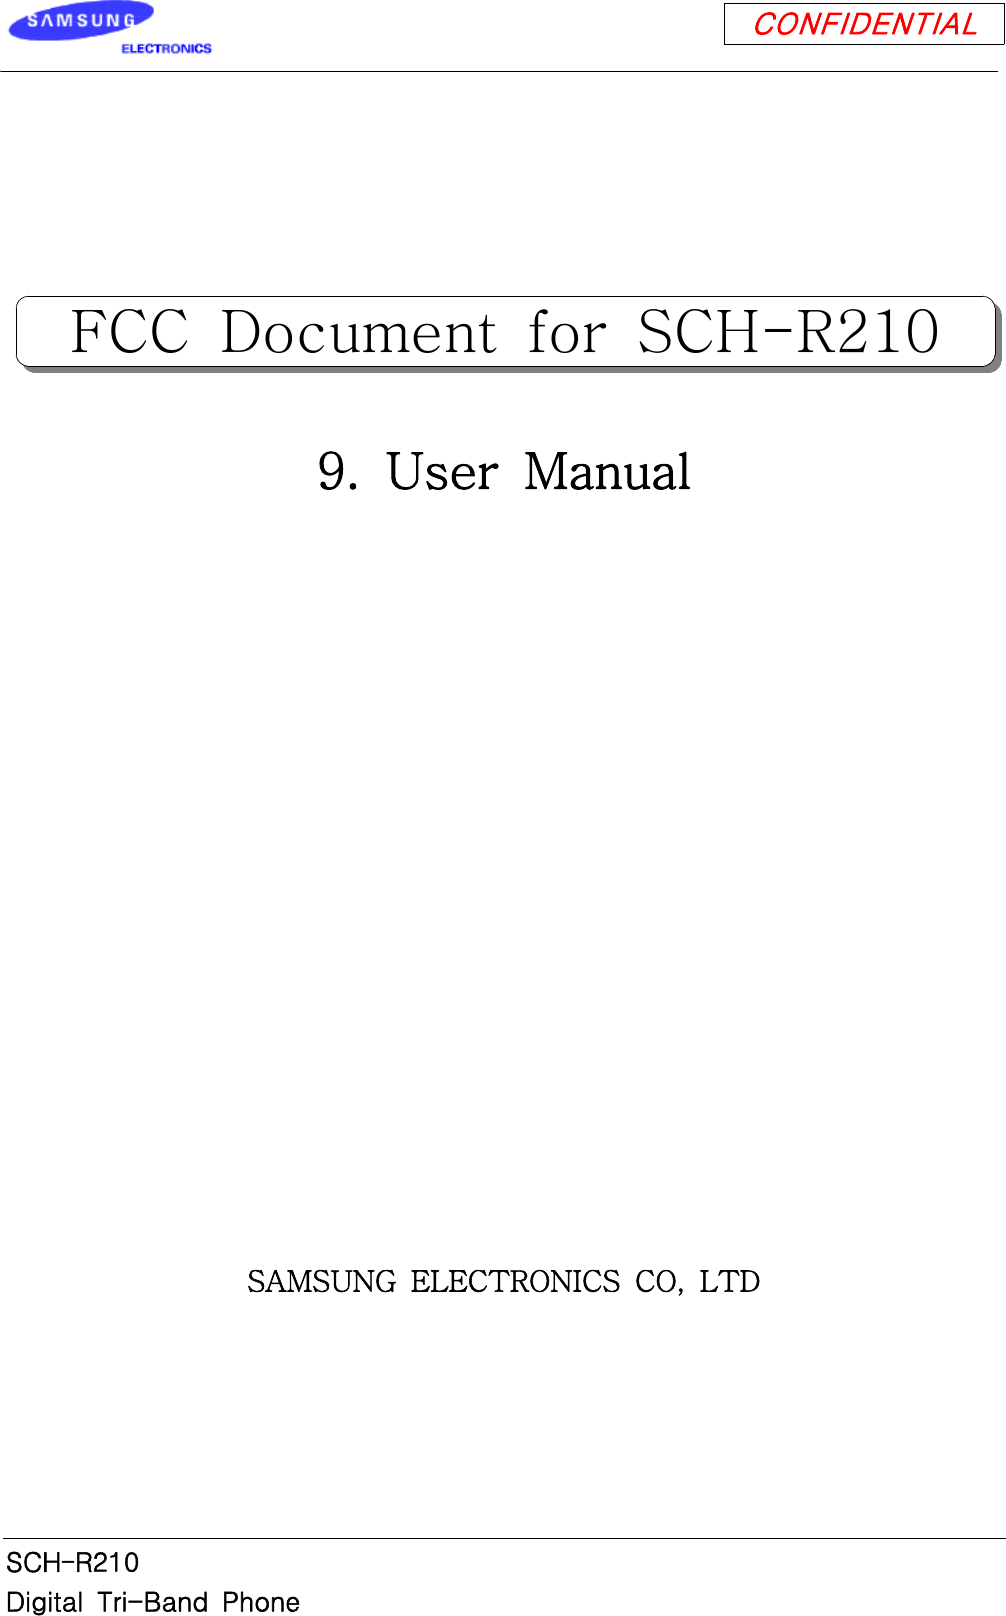 CONFIDENTIALSCH-R210Digital Tri-Band Phone9. User ManualSAMSUNG ELECTRONICS CO, LTDFCC Document for SCH-R210